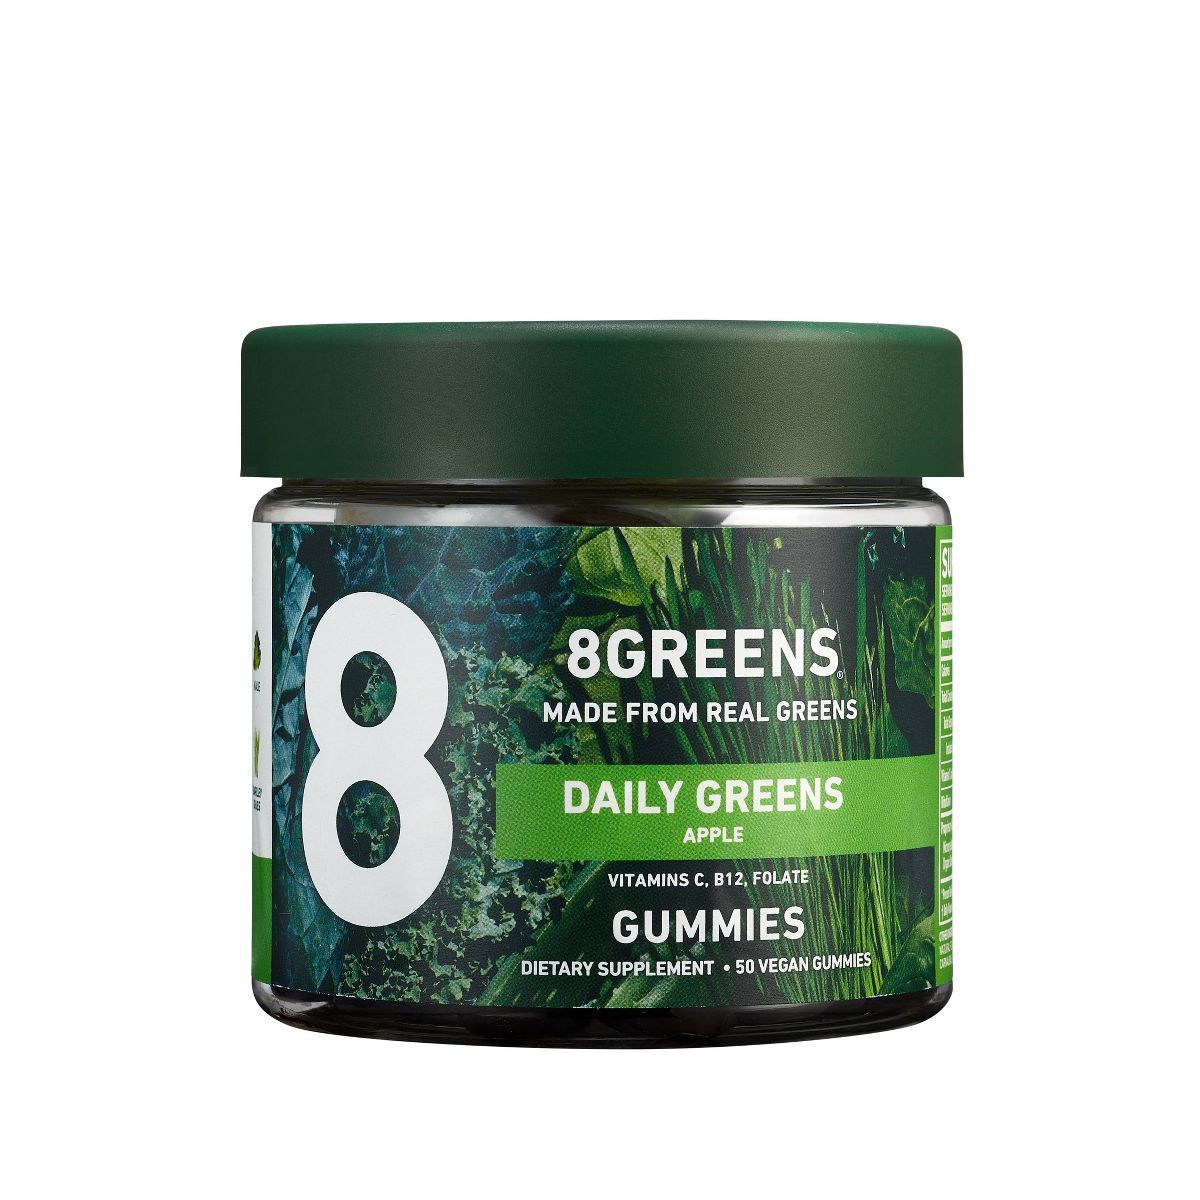 8Greens Daily Greens Vegan Gummies Dietary Supplement - Apple | Target